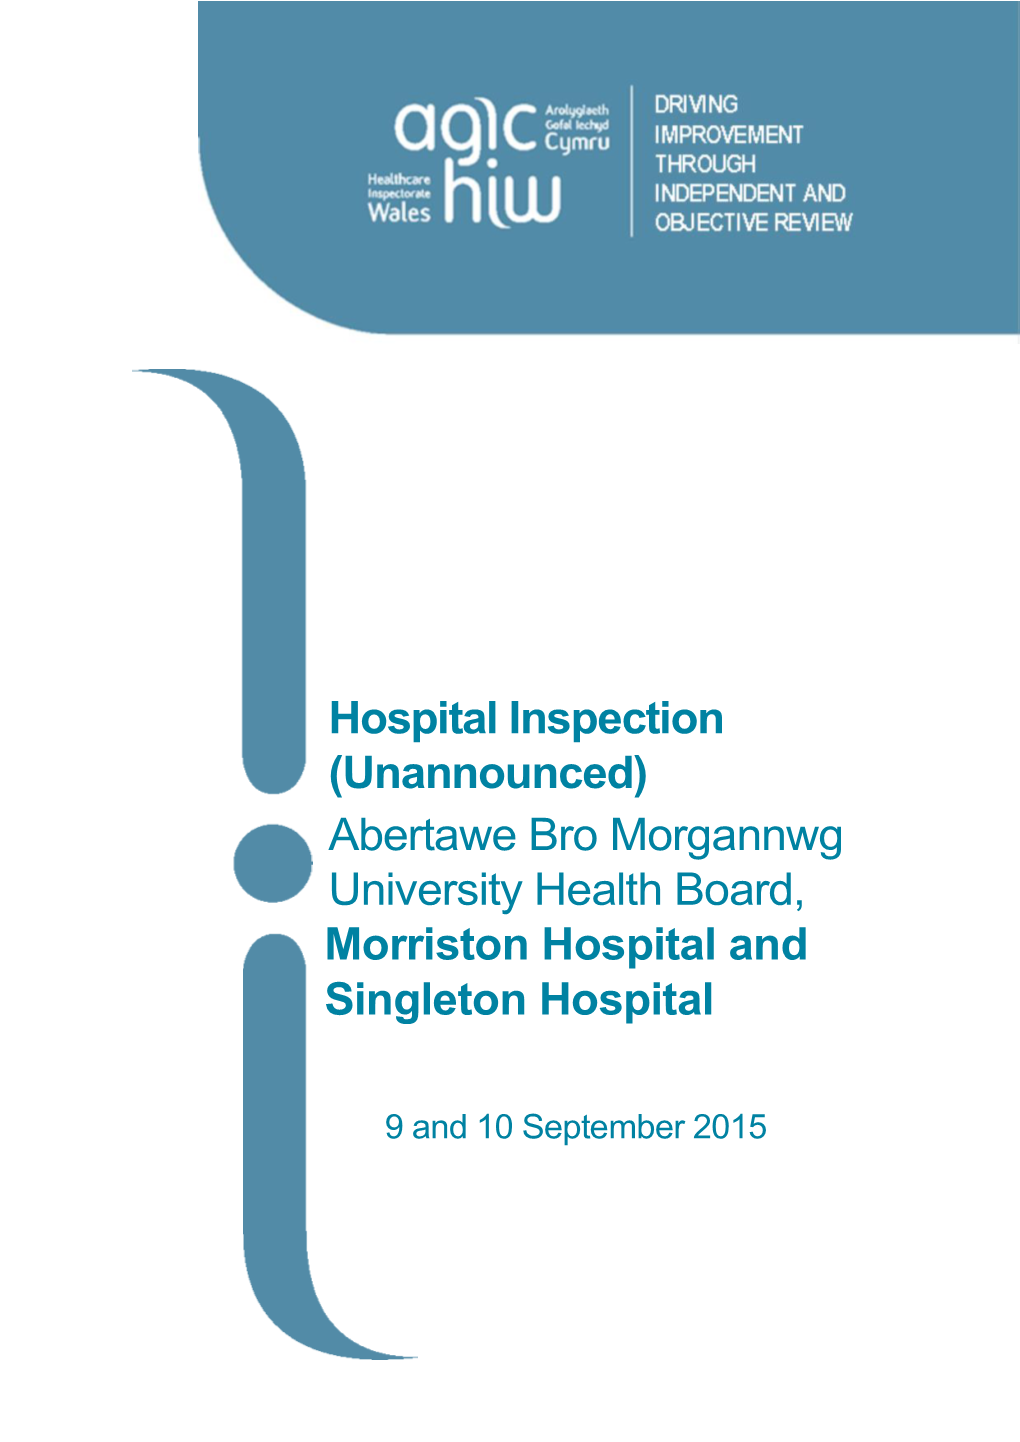 Abertawe Bro Morgannwg University Health Board, Morriston Hospital and Singleton Hospital